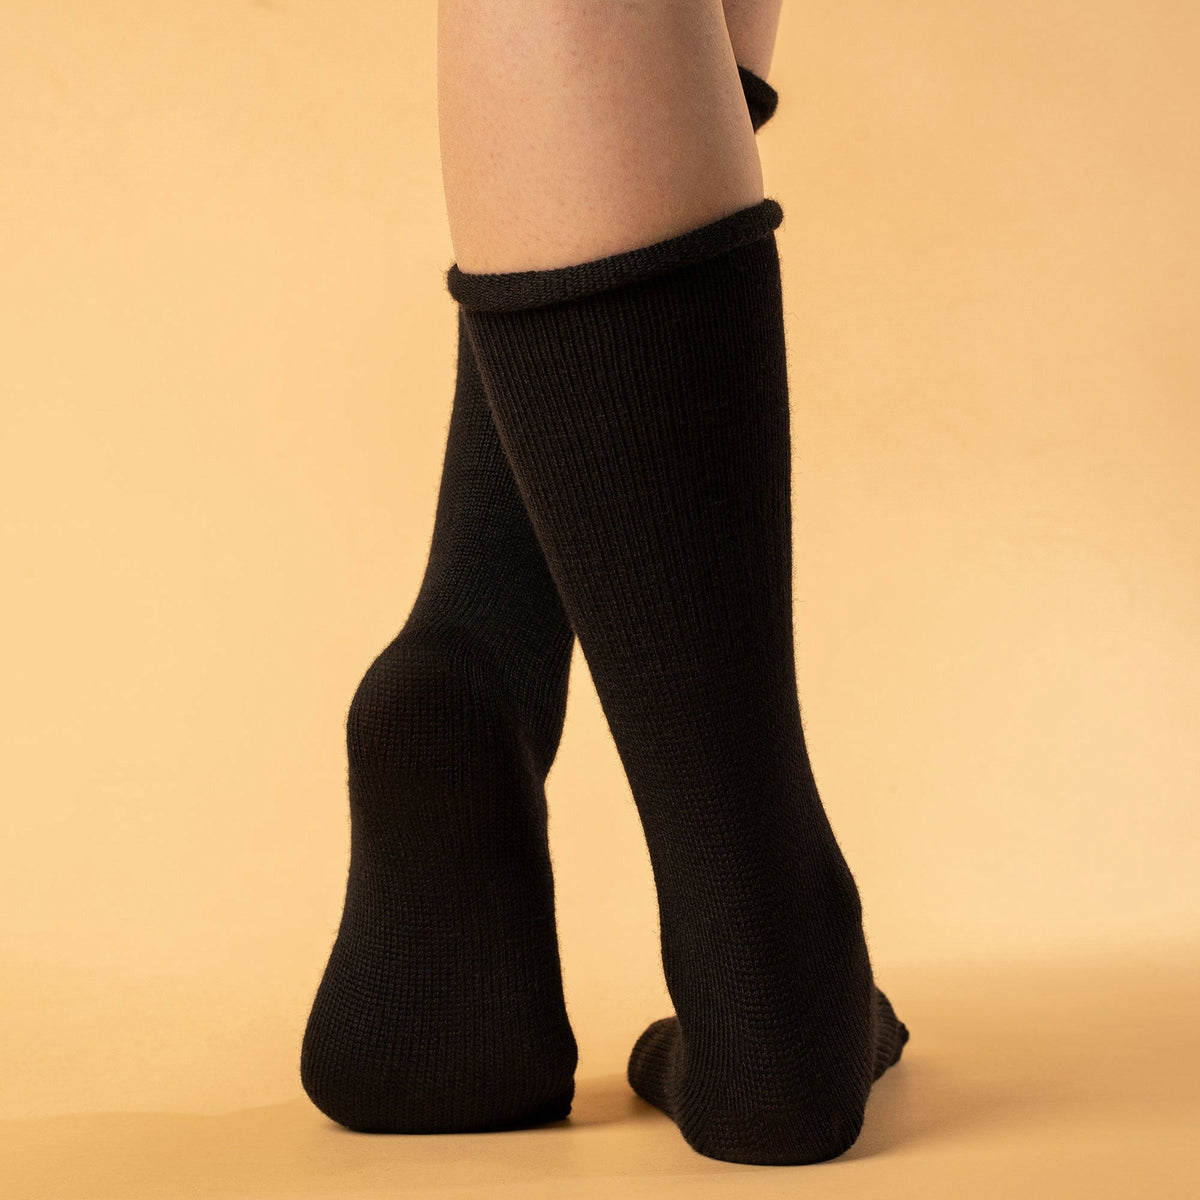 MENIQUE 100% Merino Wool Womens Socks 2-Pack Black/Creamy beige